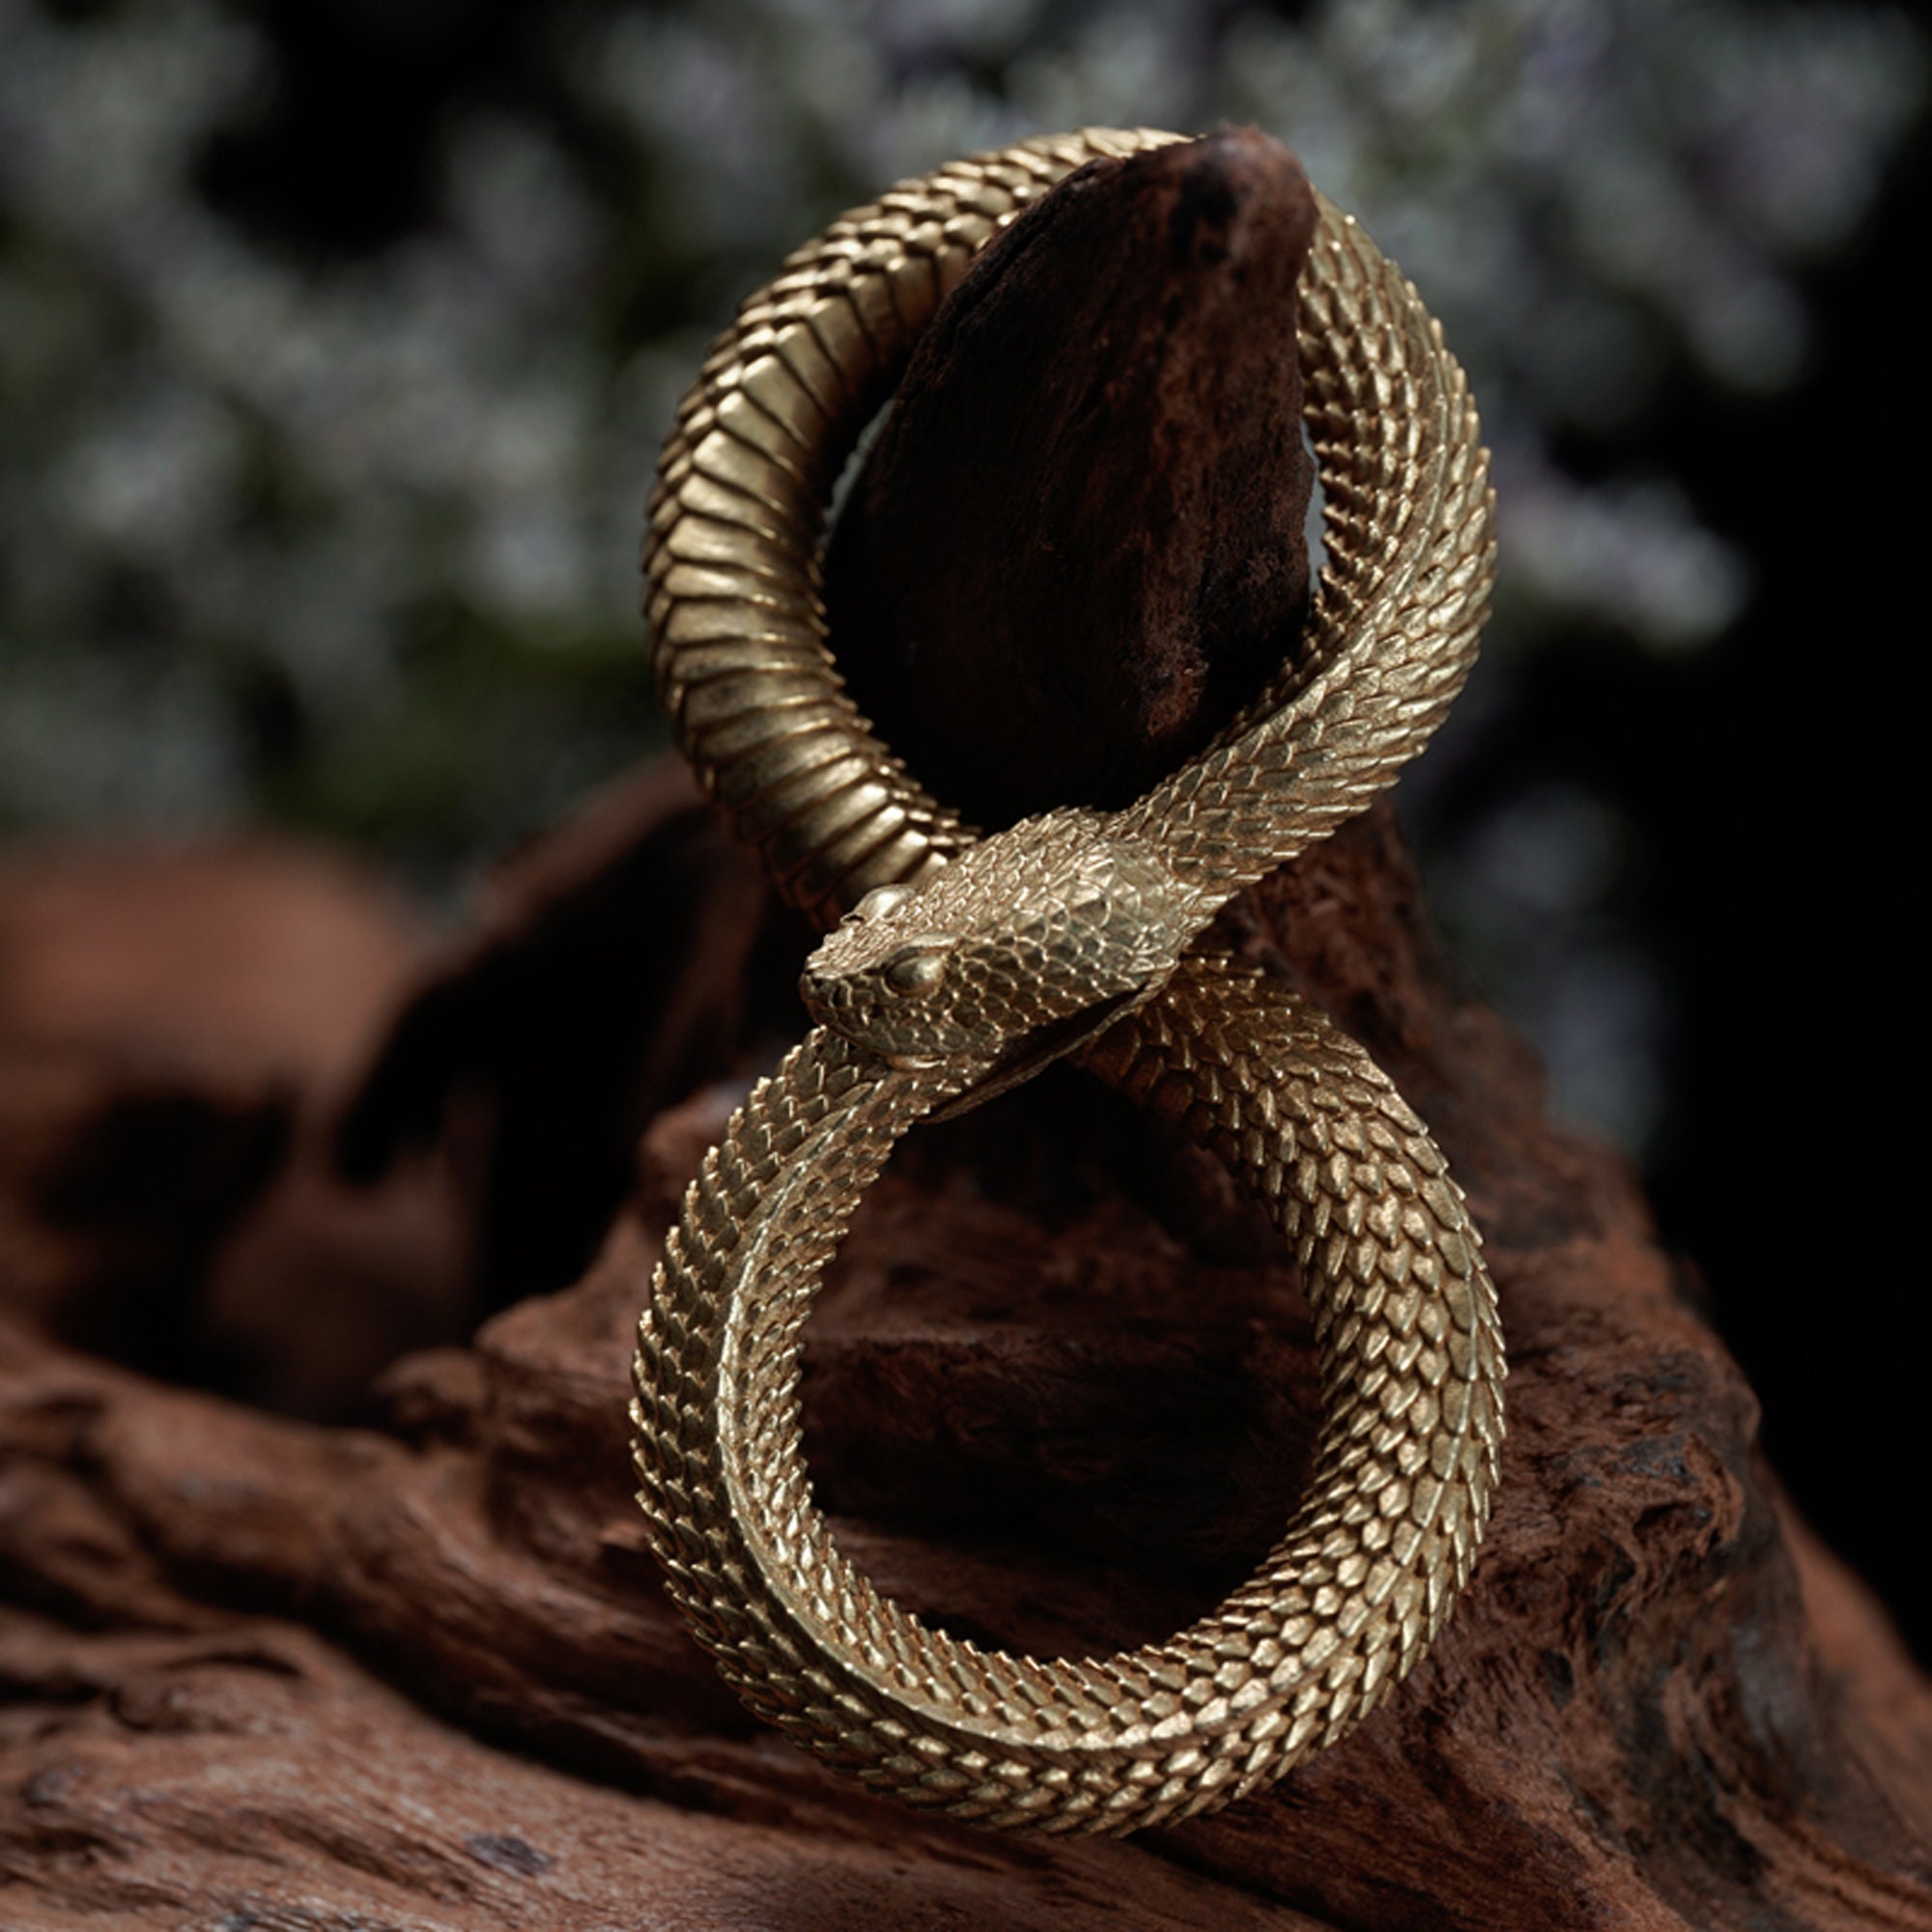 MSbeadsupplies 10 Pcs Locking Key Ring with Snake Chain